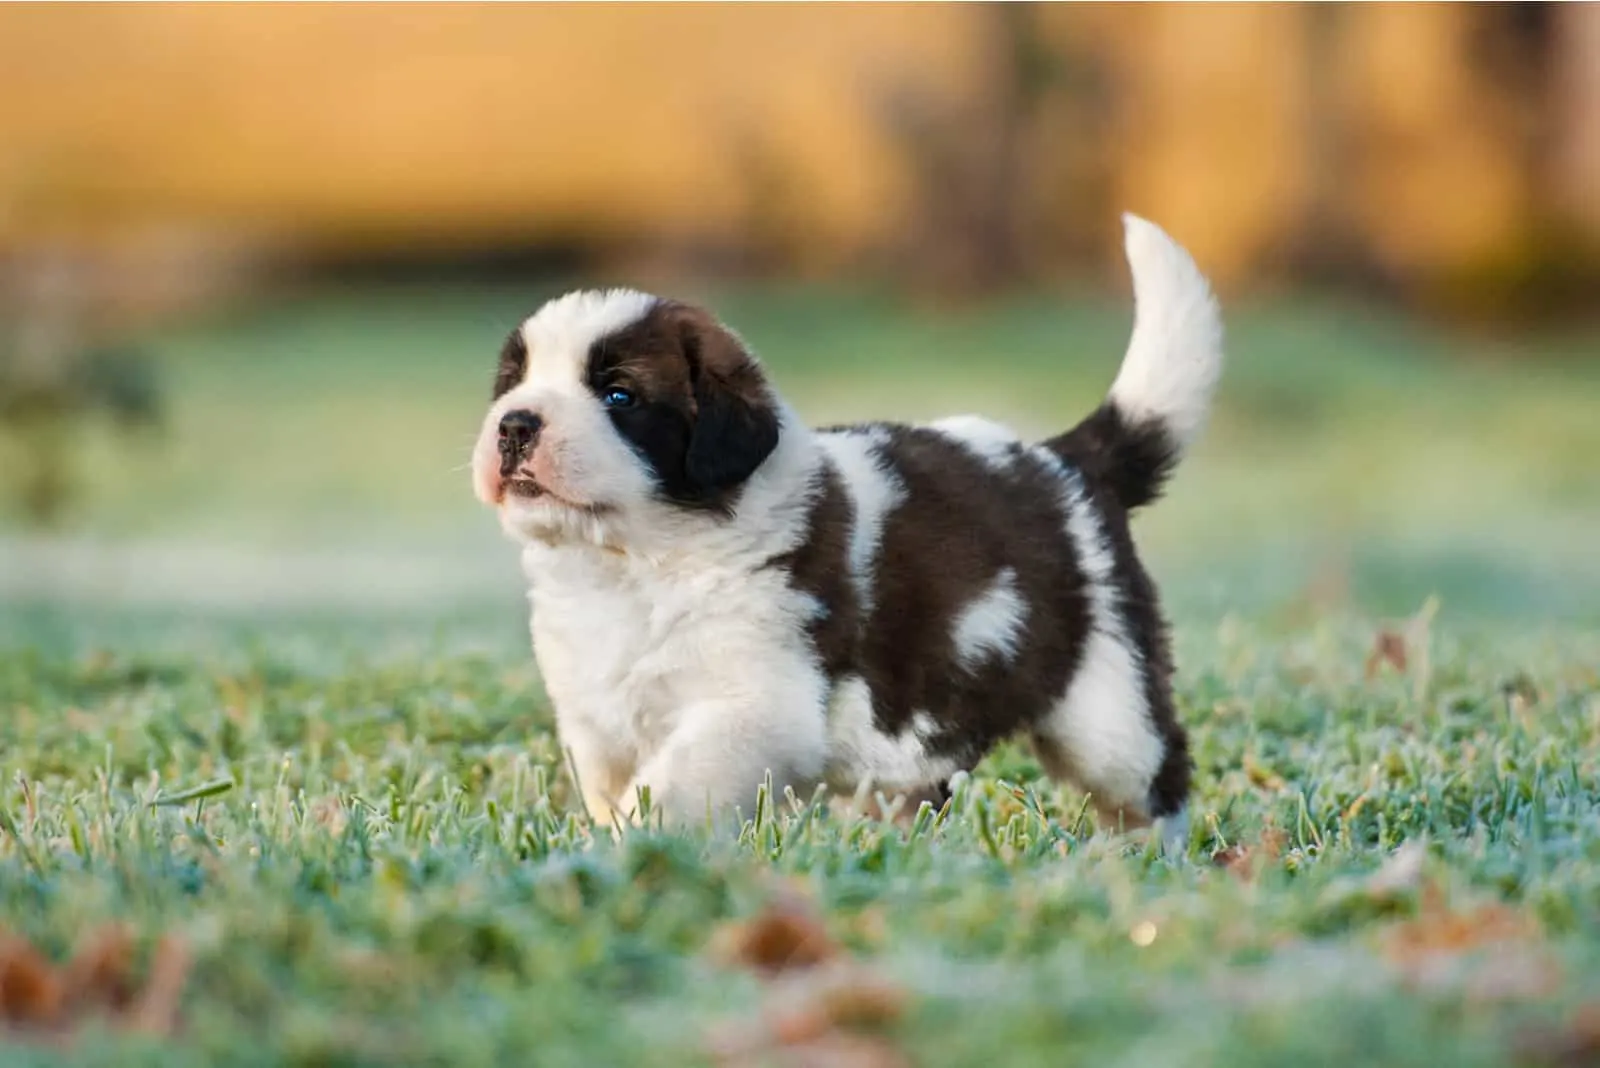 Saint Bernard puppy walking on grass outside